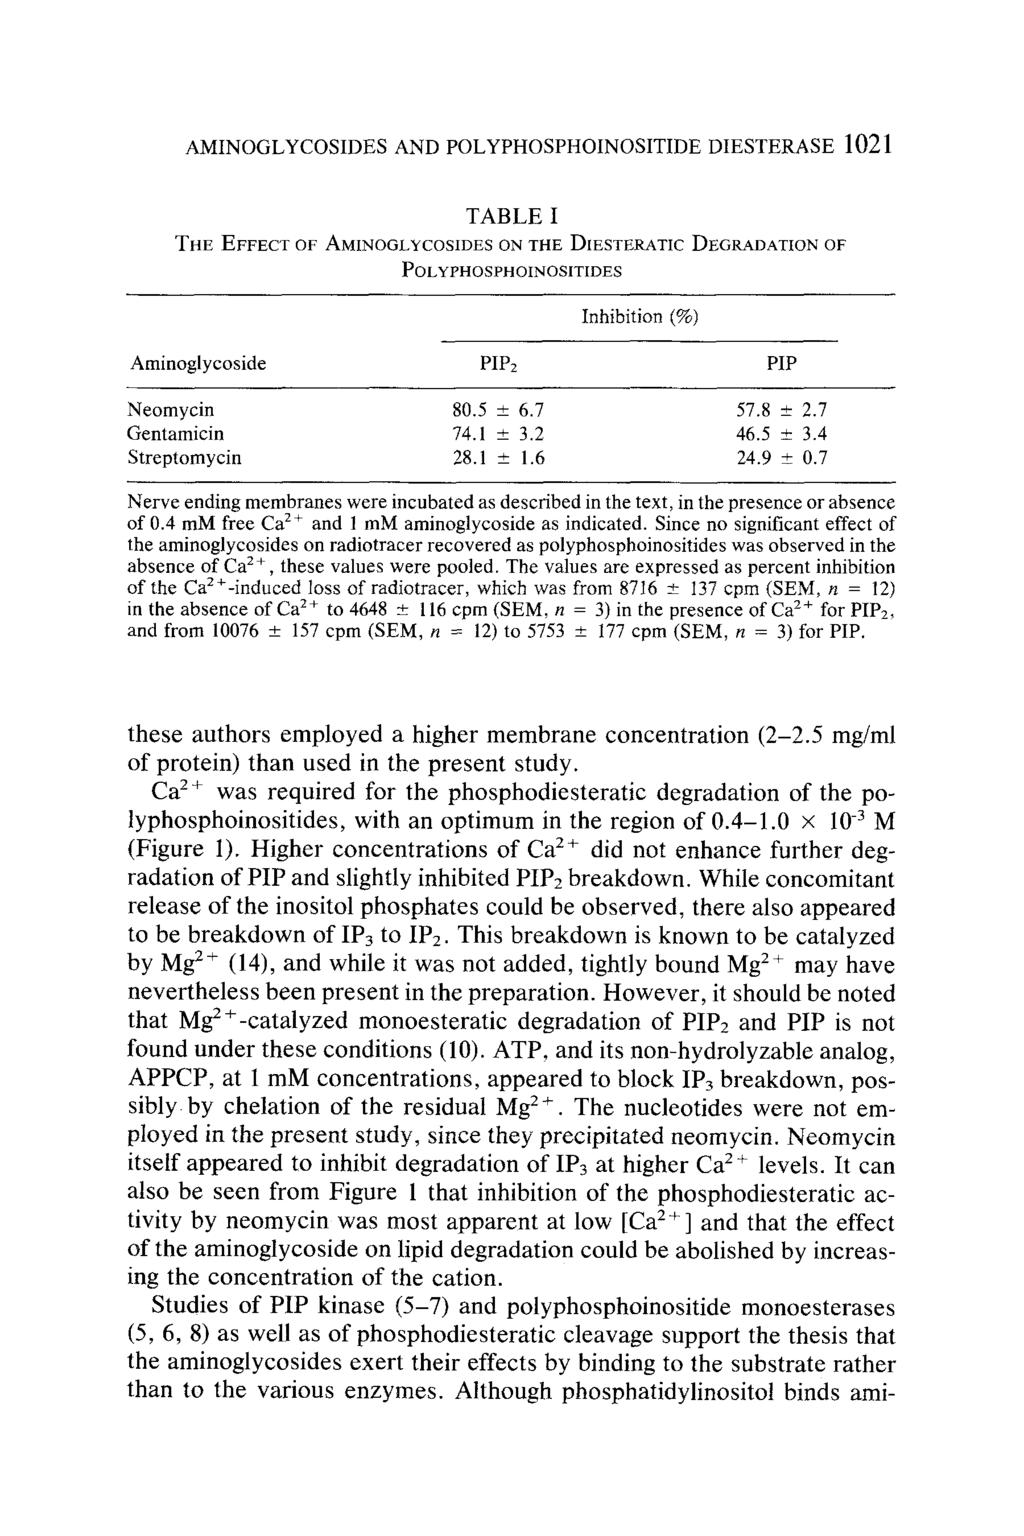 AMINOGLYCOSIDES AND POLYPHOSPHOINOSITIDE DIESTERASE 1021 TABLE I THE EFFECT OF AMINOGLYCOSIDES ON THE DIESTERATIC DEGRADATION OF POLYPHOSPHOINOSITIDES Inhibition (%) Aminoglycoside PIP2 PIP Neomycin